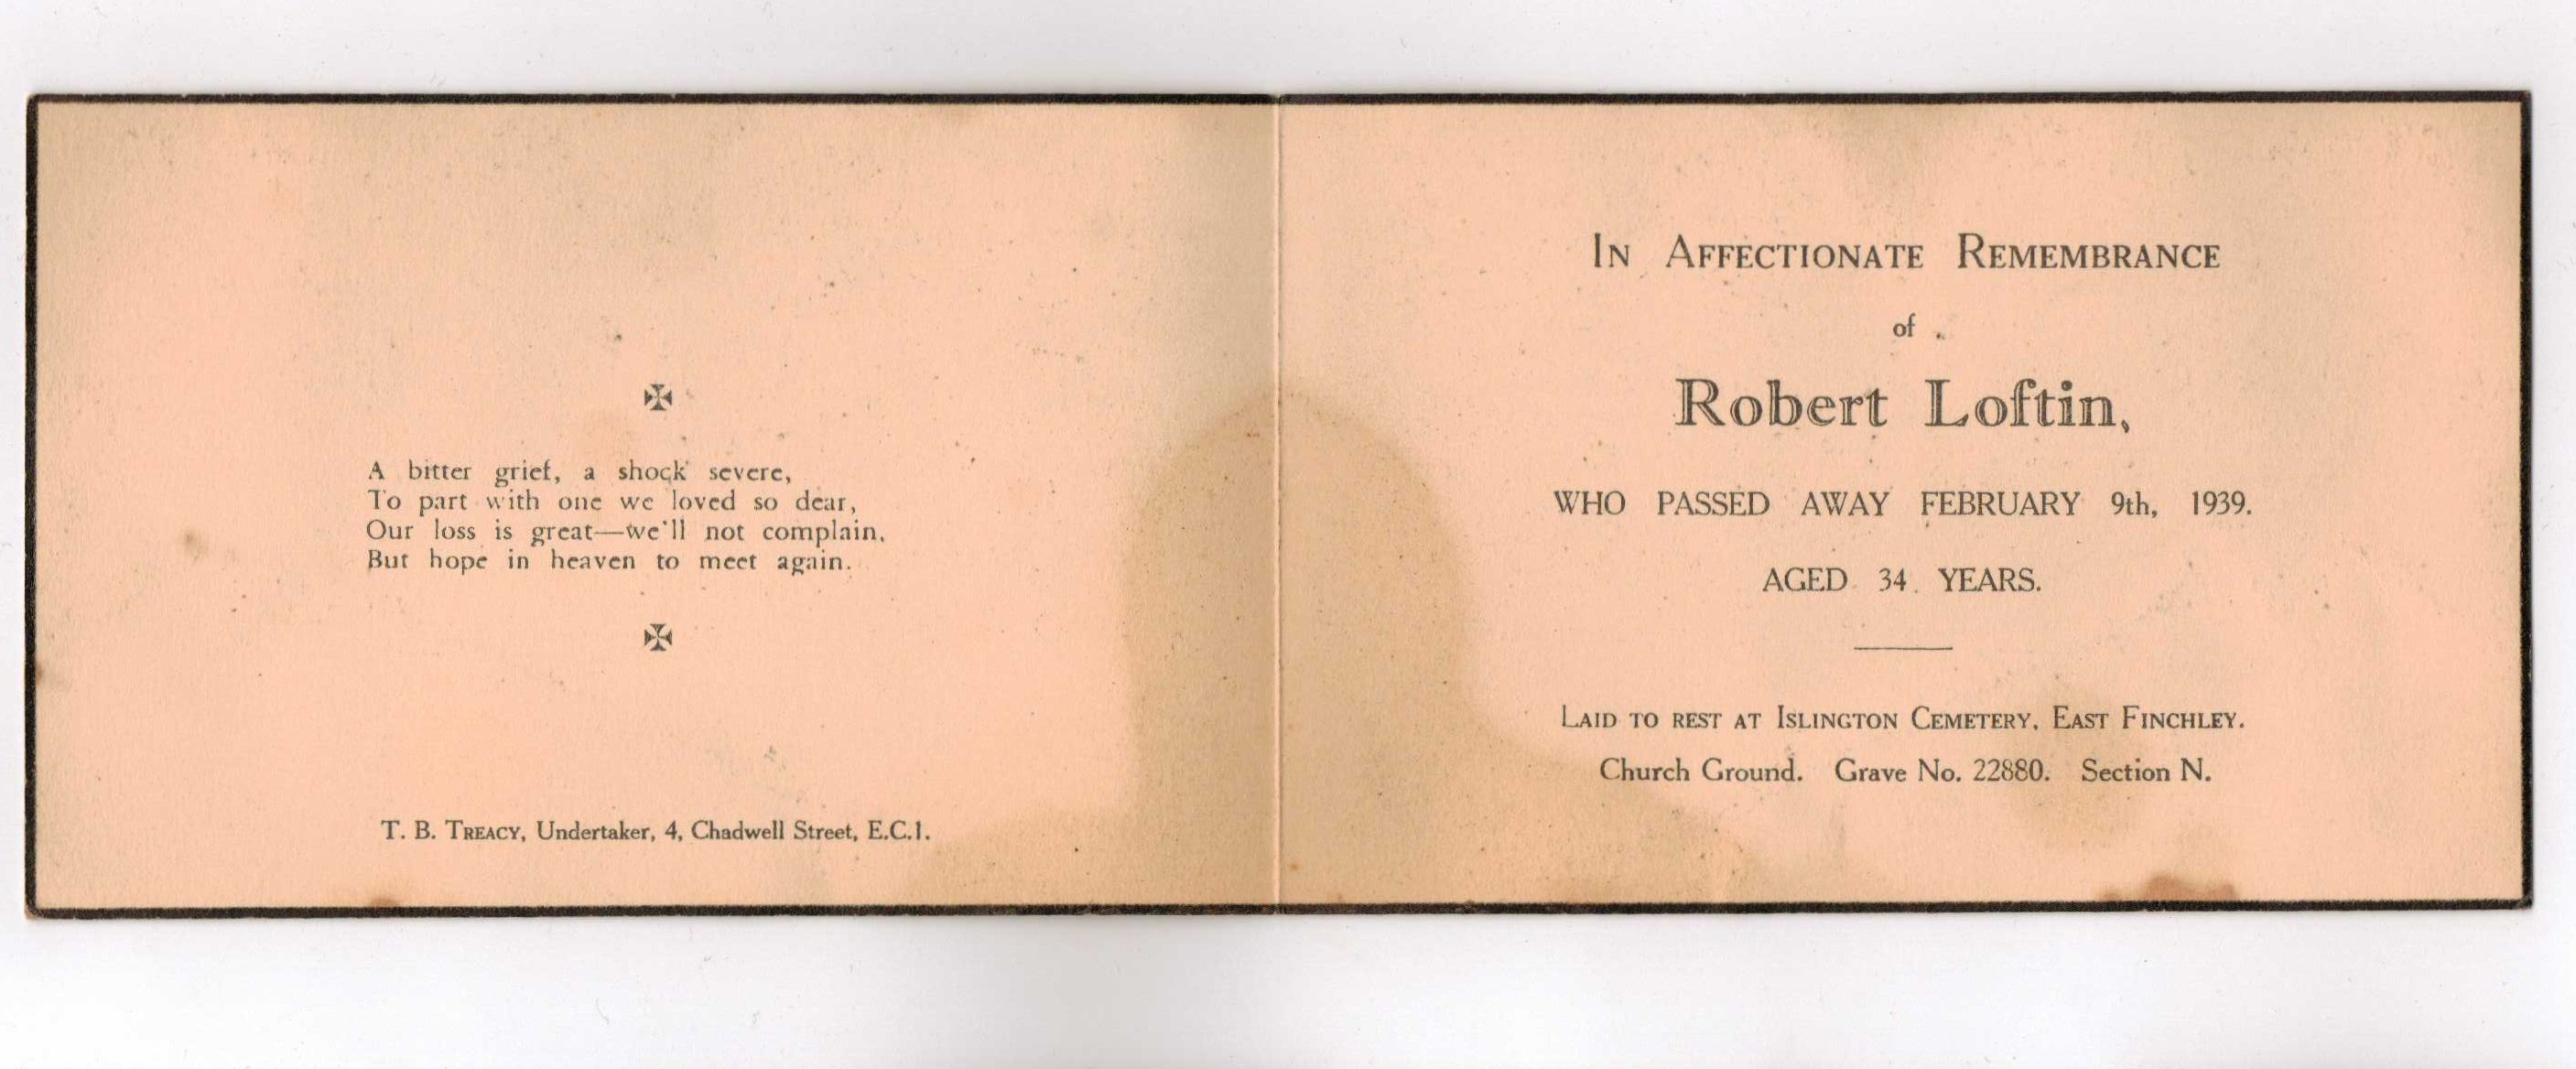 Robert Loftin funeral card 1939